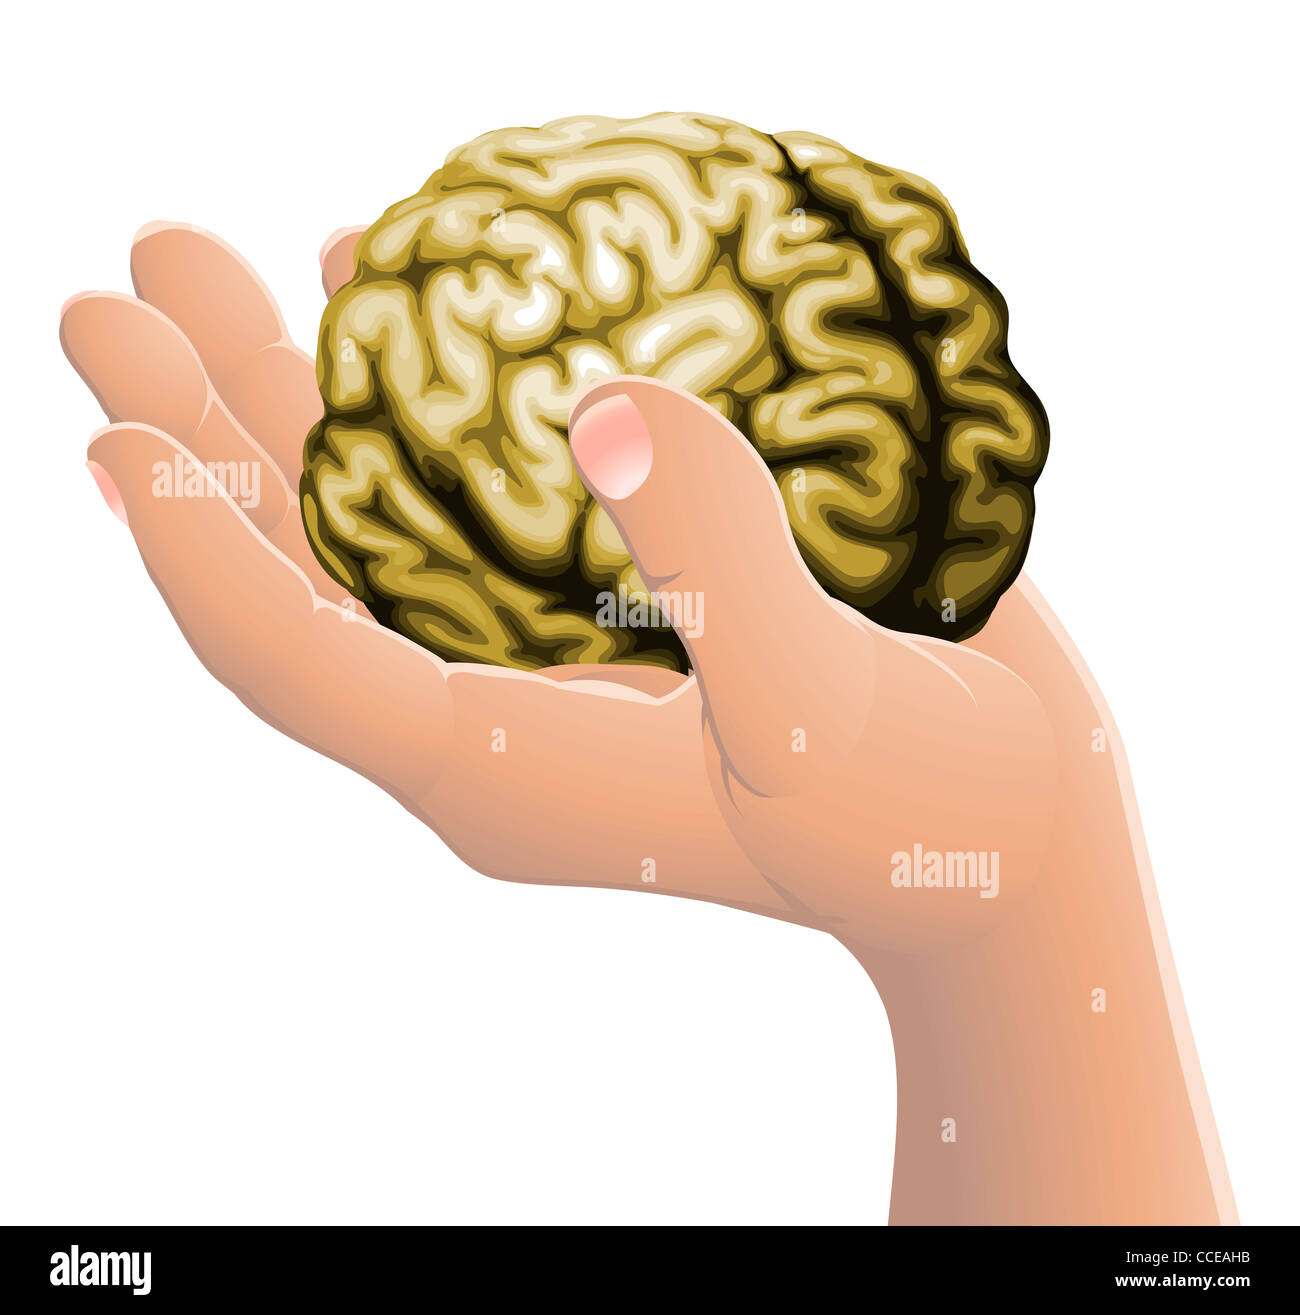 Anatomy Clipart-mental health hand holds a brain icon